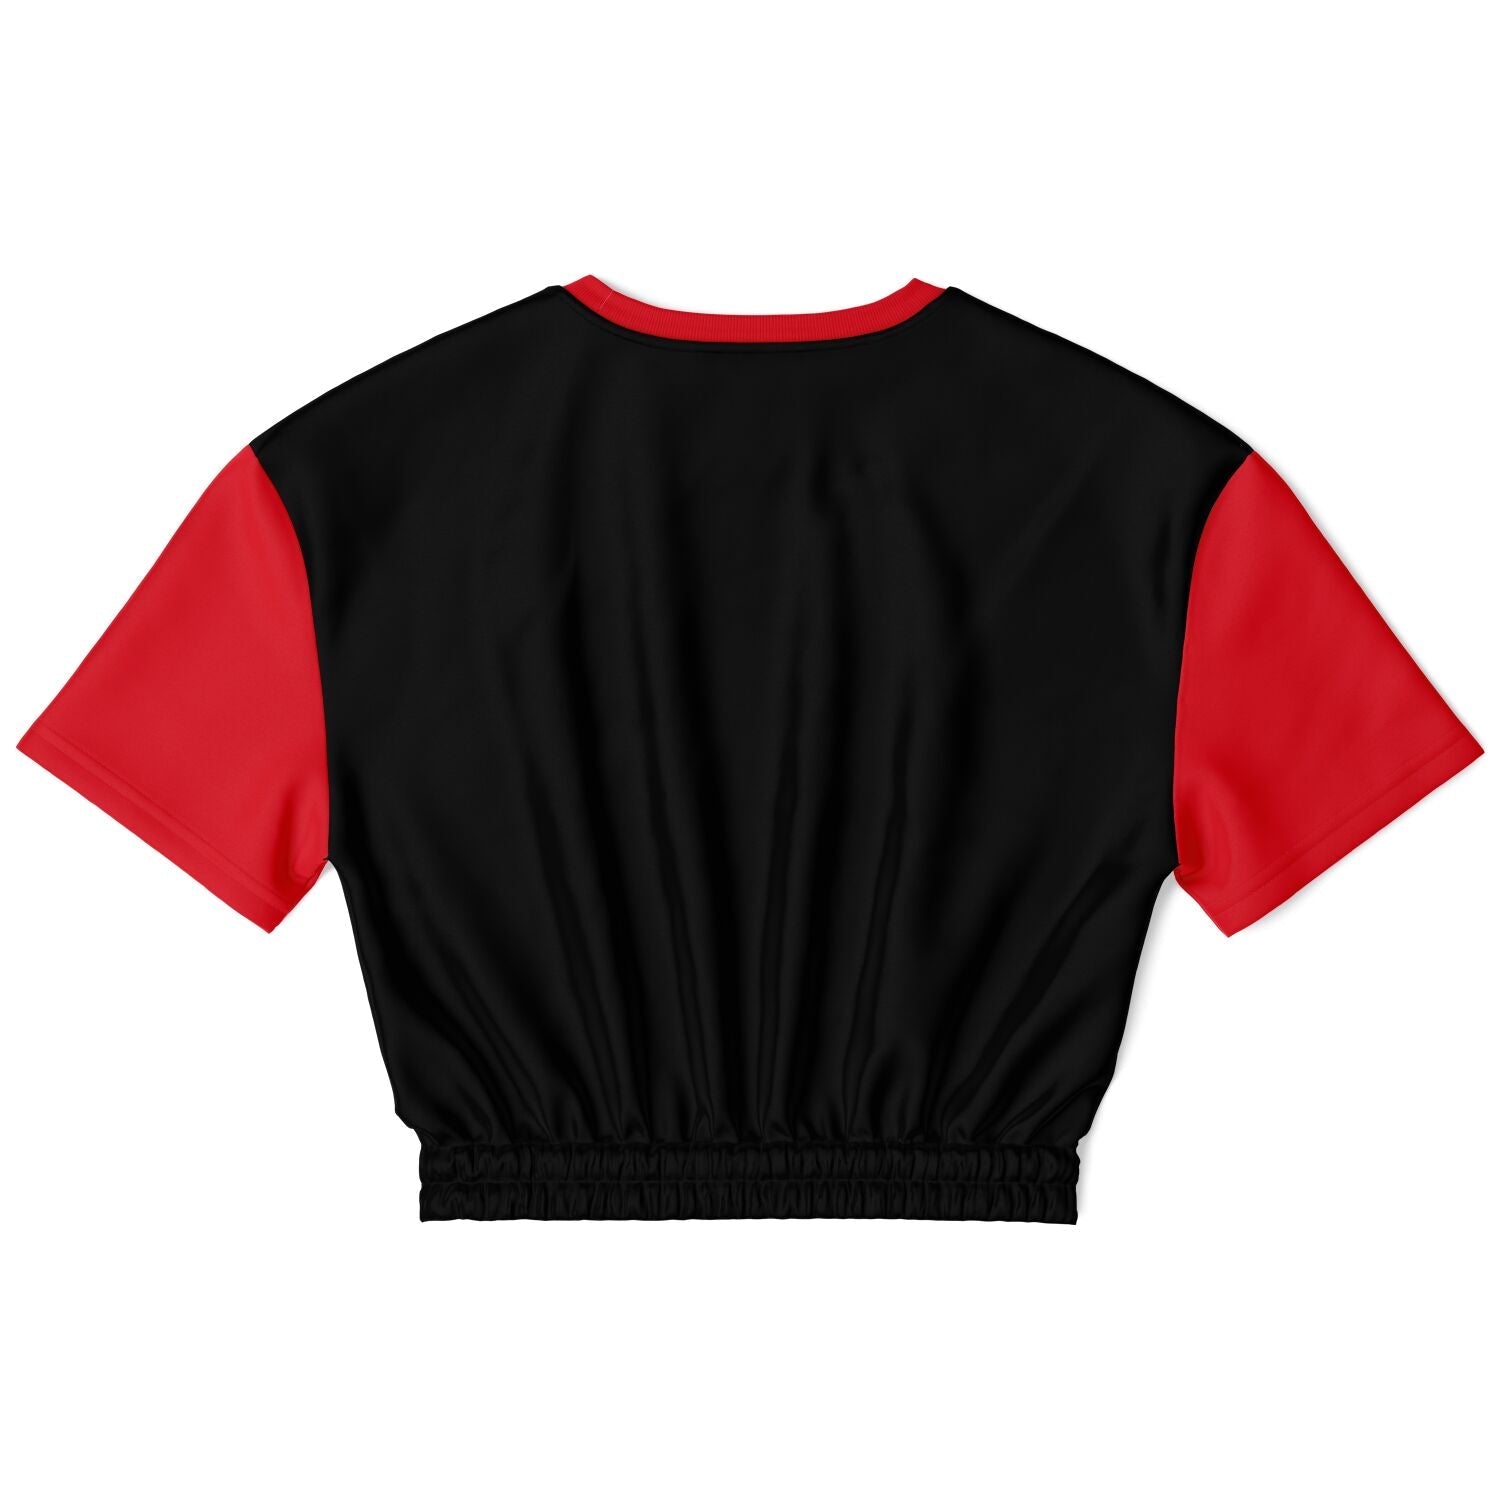 Gemini G-Mode Crop Shirt